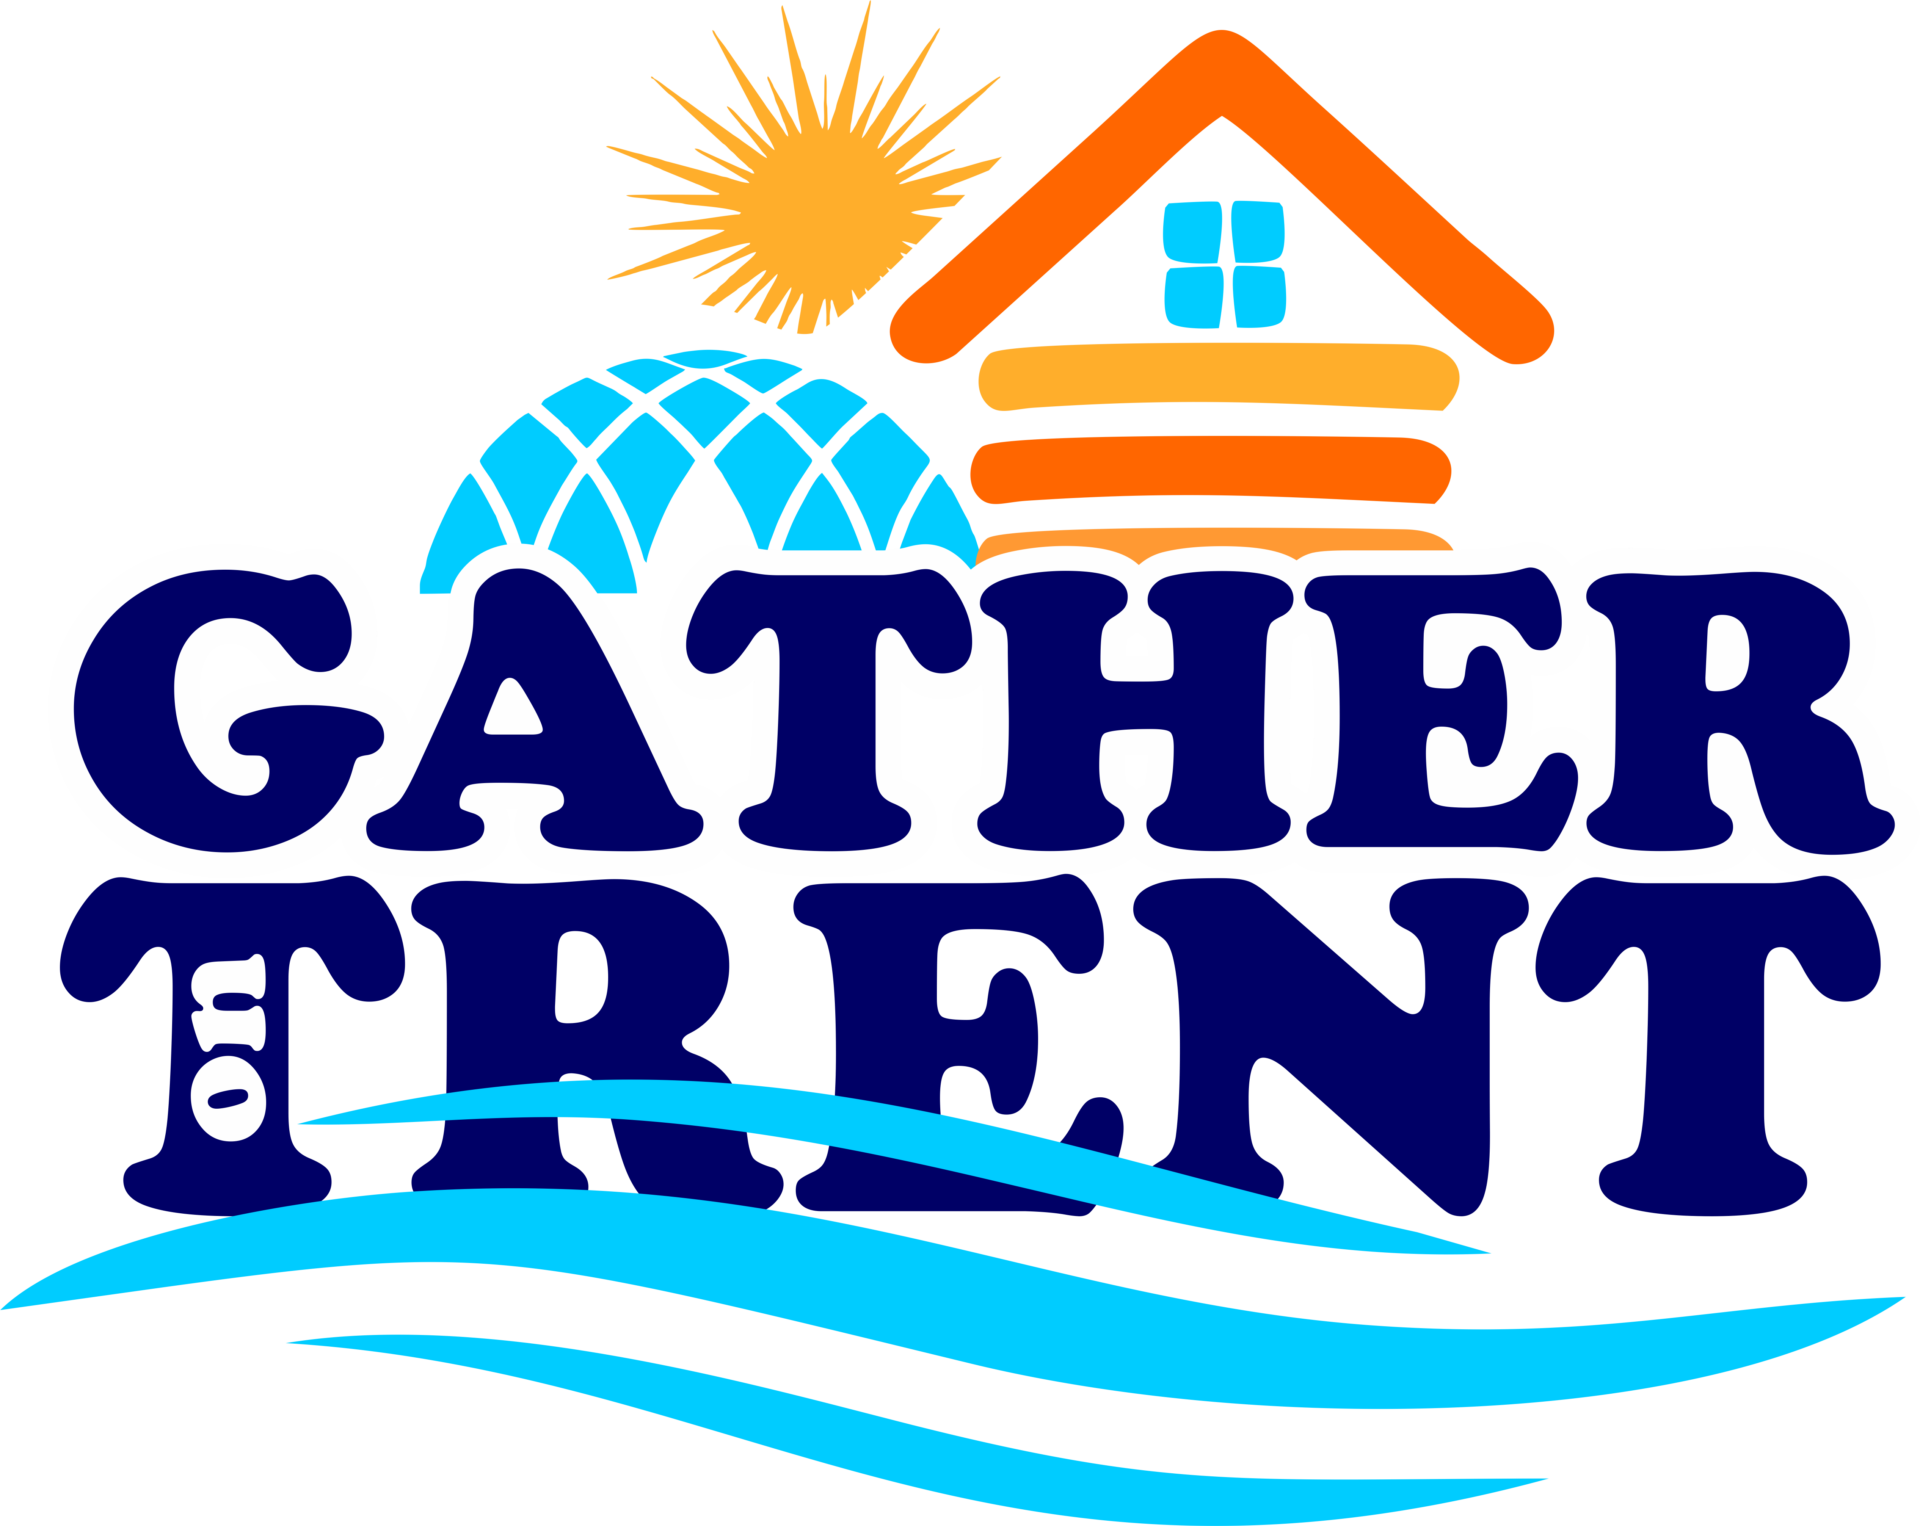 Gather on Trent-logo